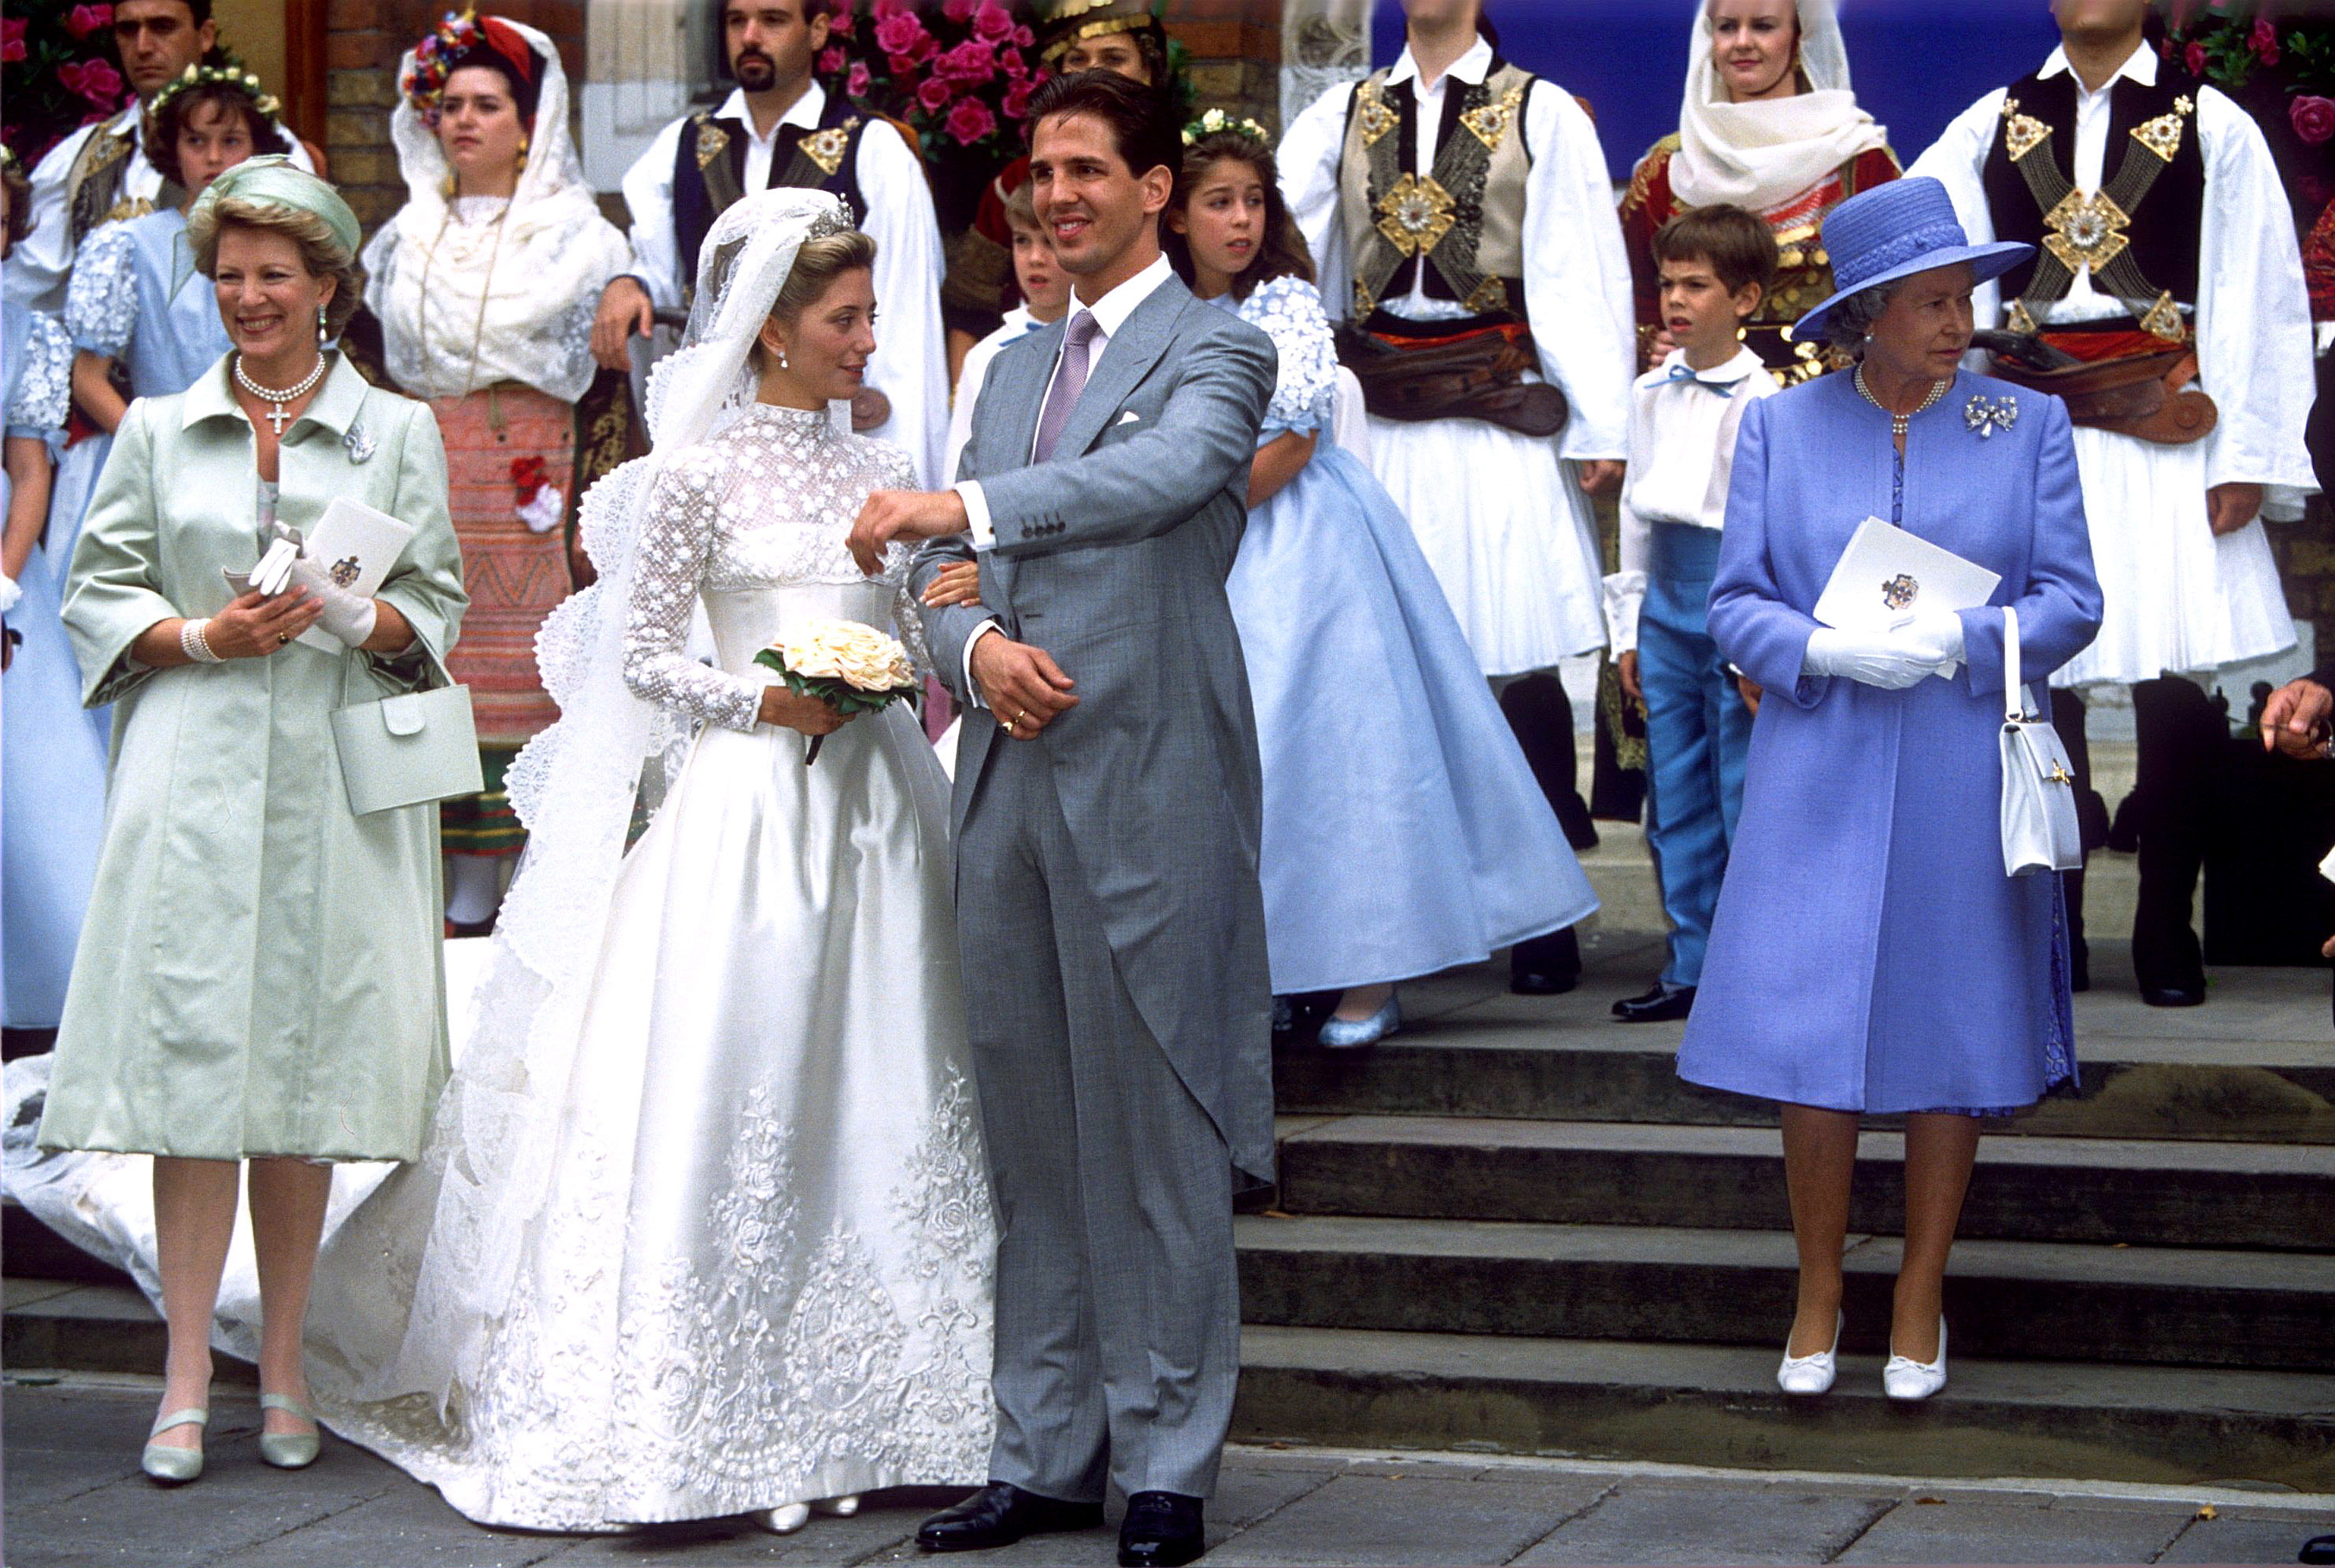 Marie-Chantal Miller wedding Prince pavlos of Greece - Royal wedding dresses | Gallery ...